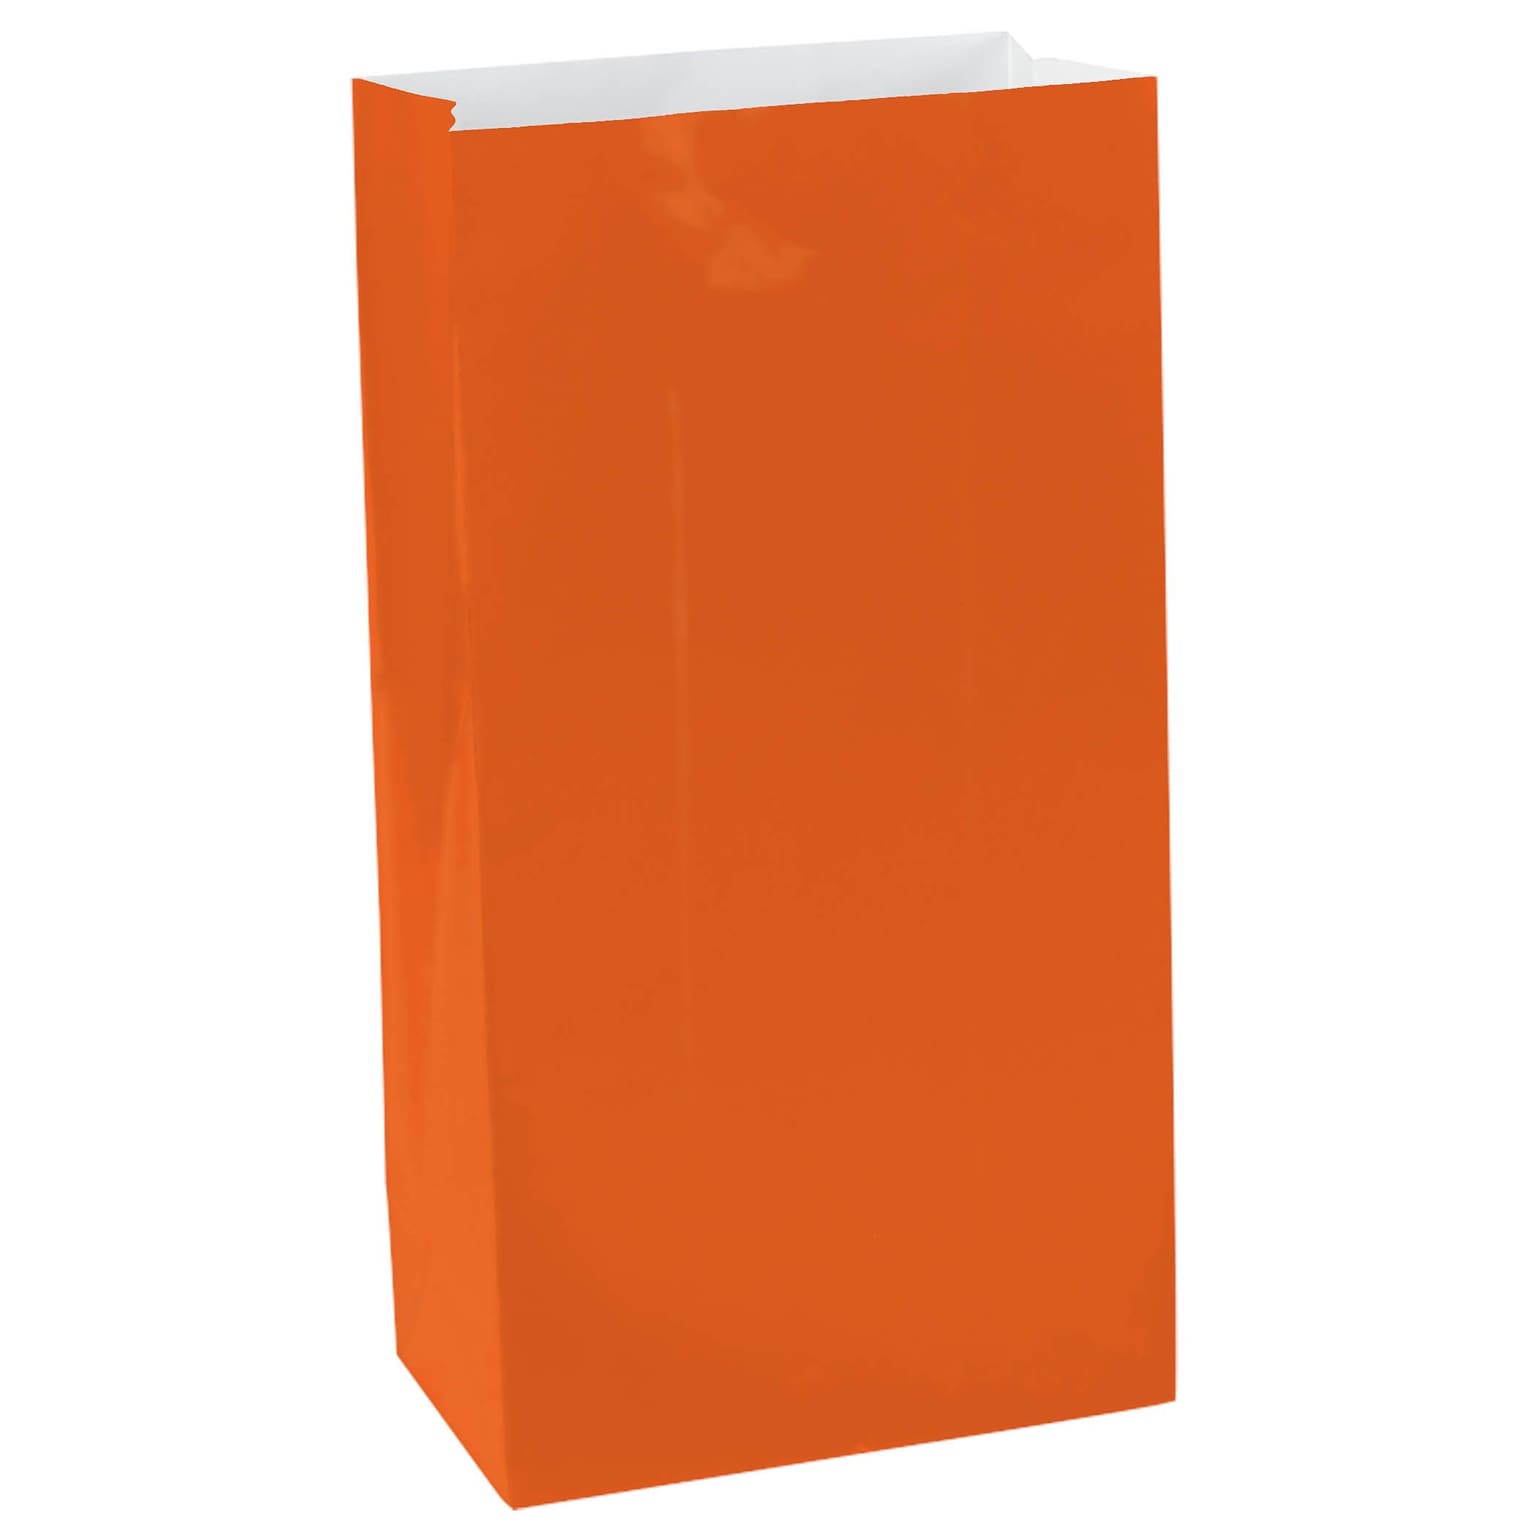 Amscan Paper Party Bag, 6.5 x 3, Orange Peel, 9/Pack, 12 Bags/Pack (370202.05)